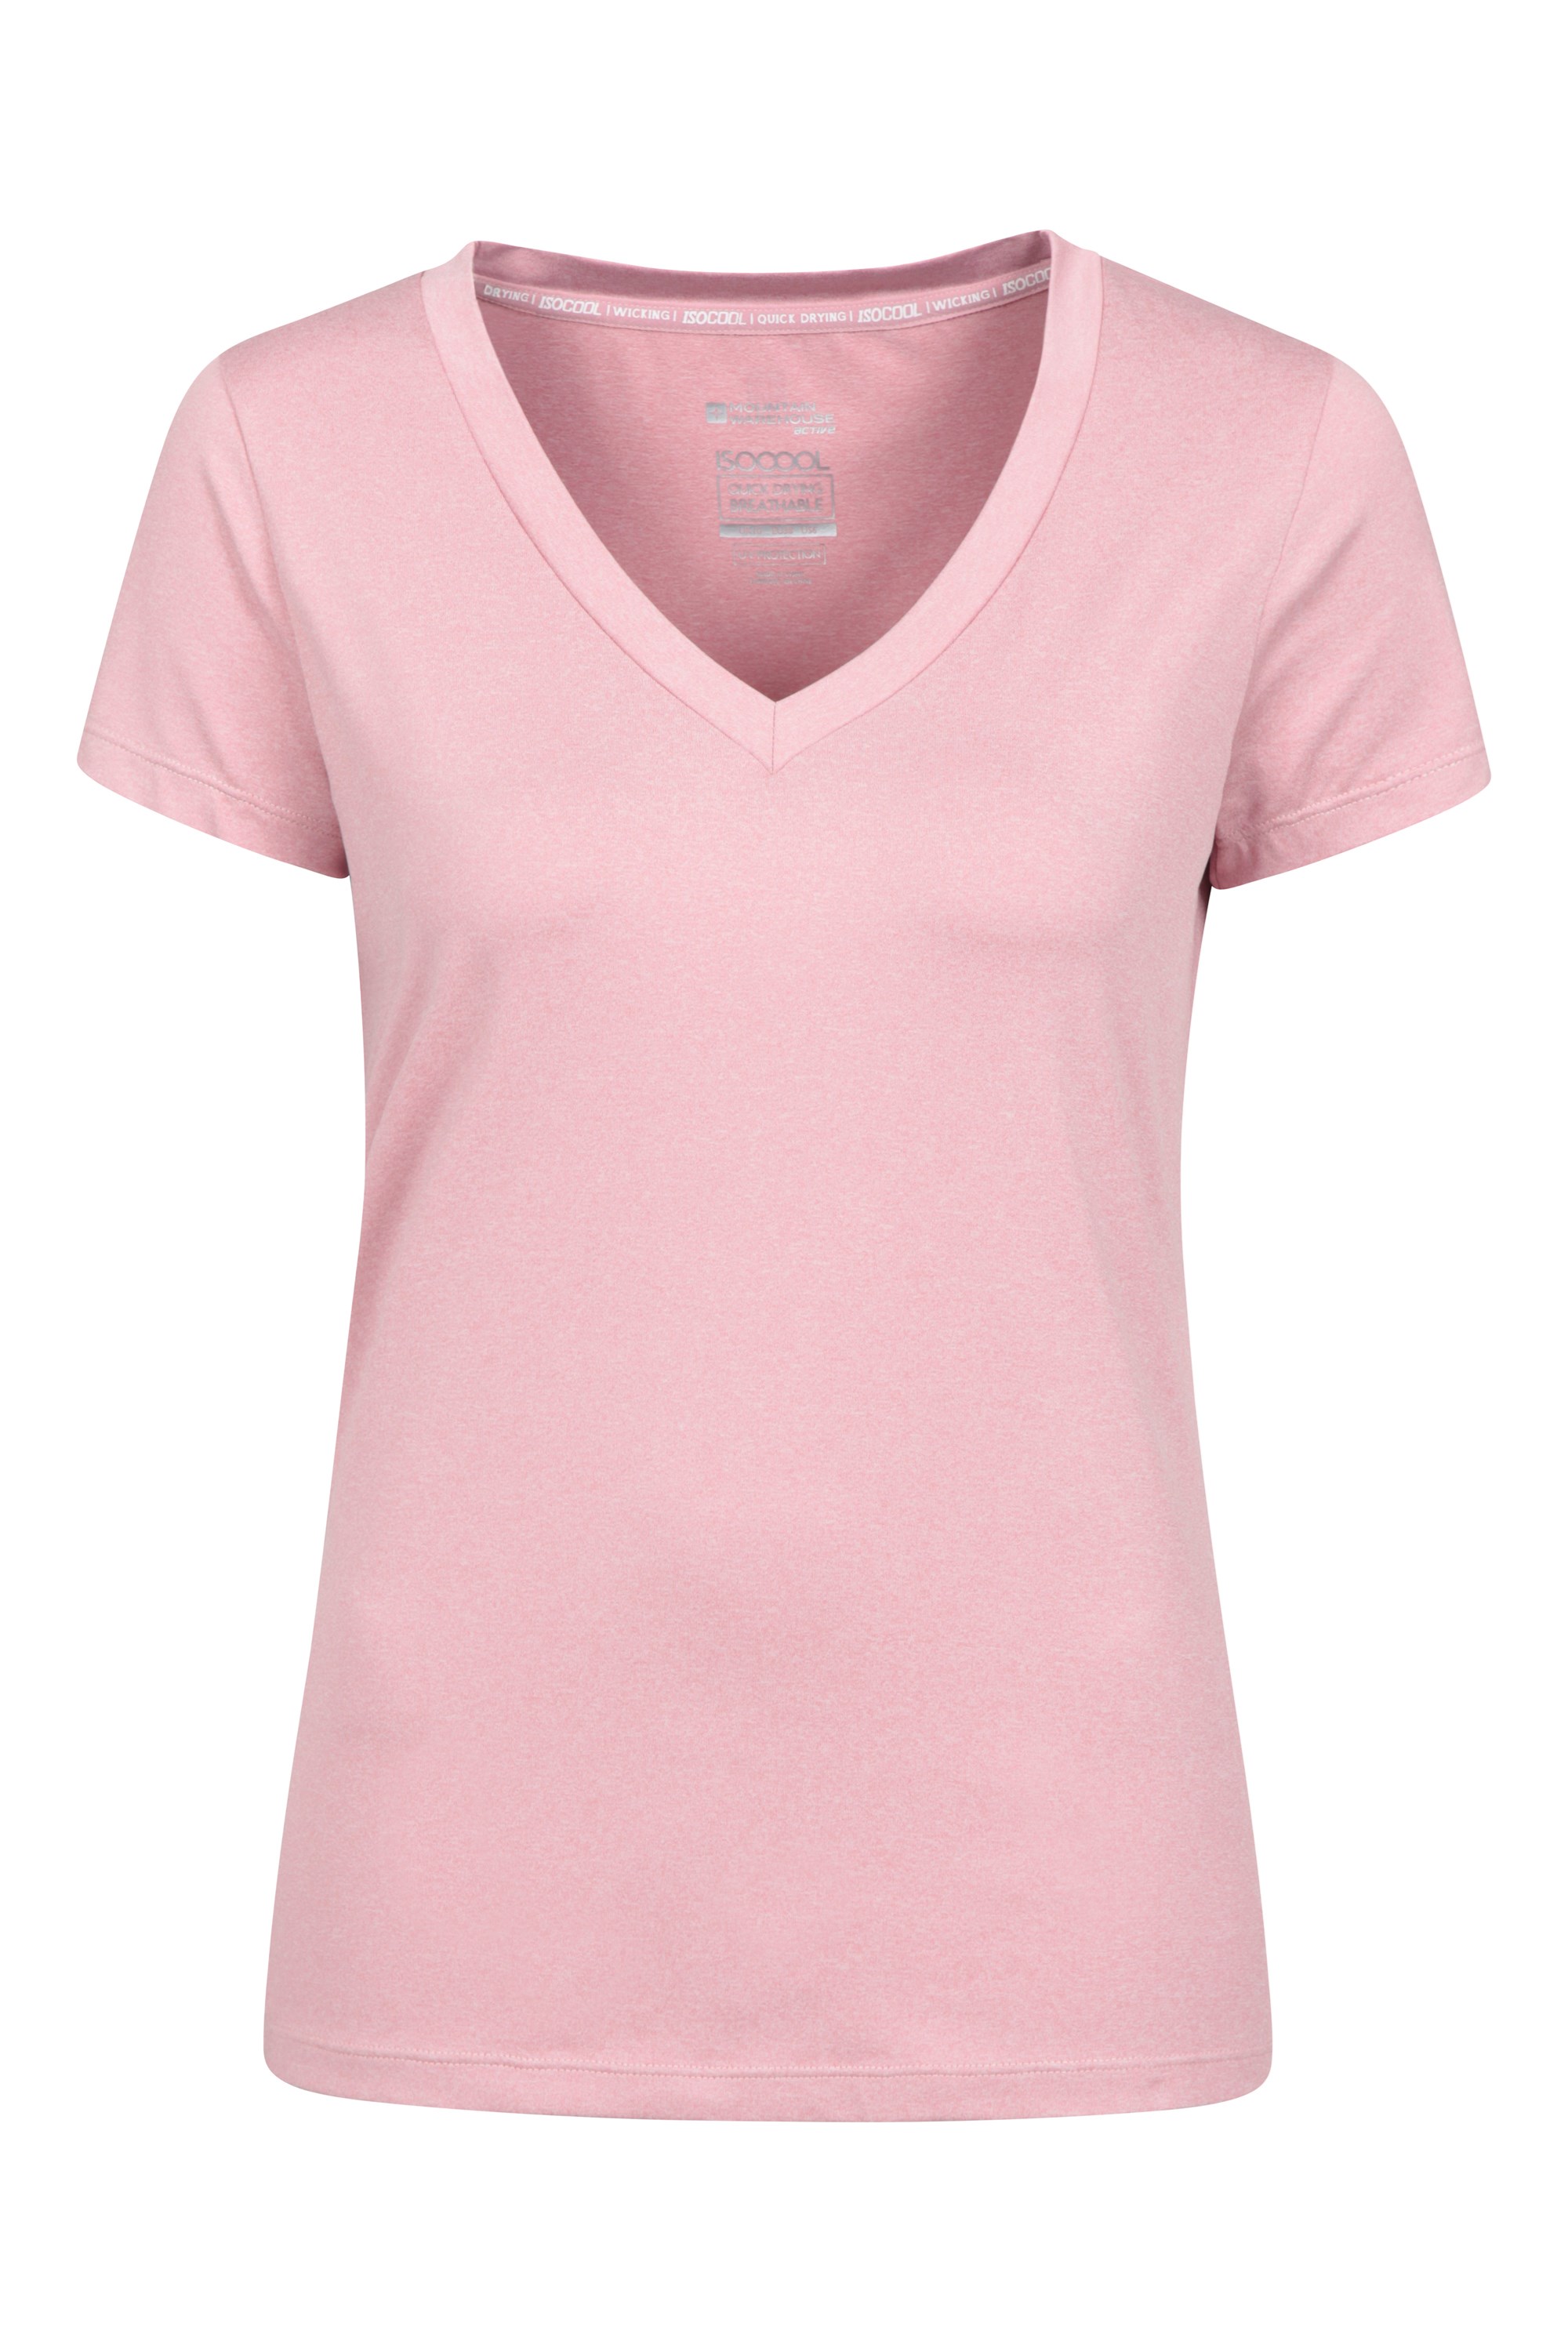 Vitality — damska koszulka z dekoltem w serek - Pink